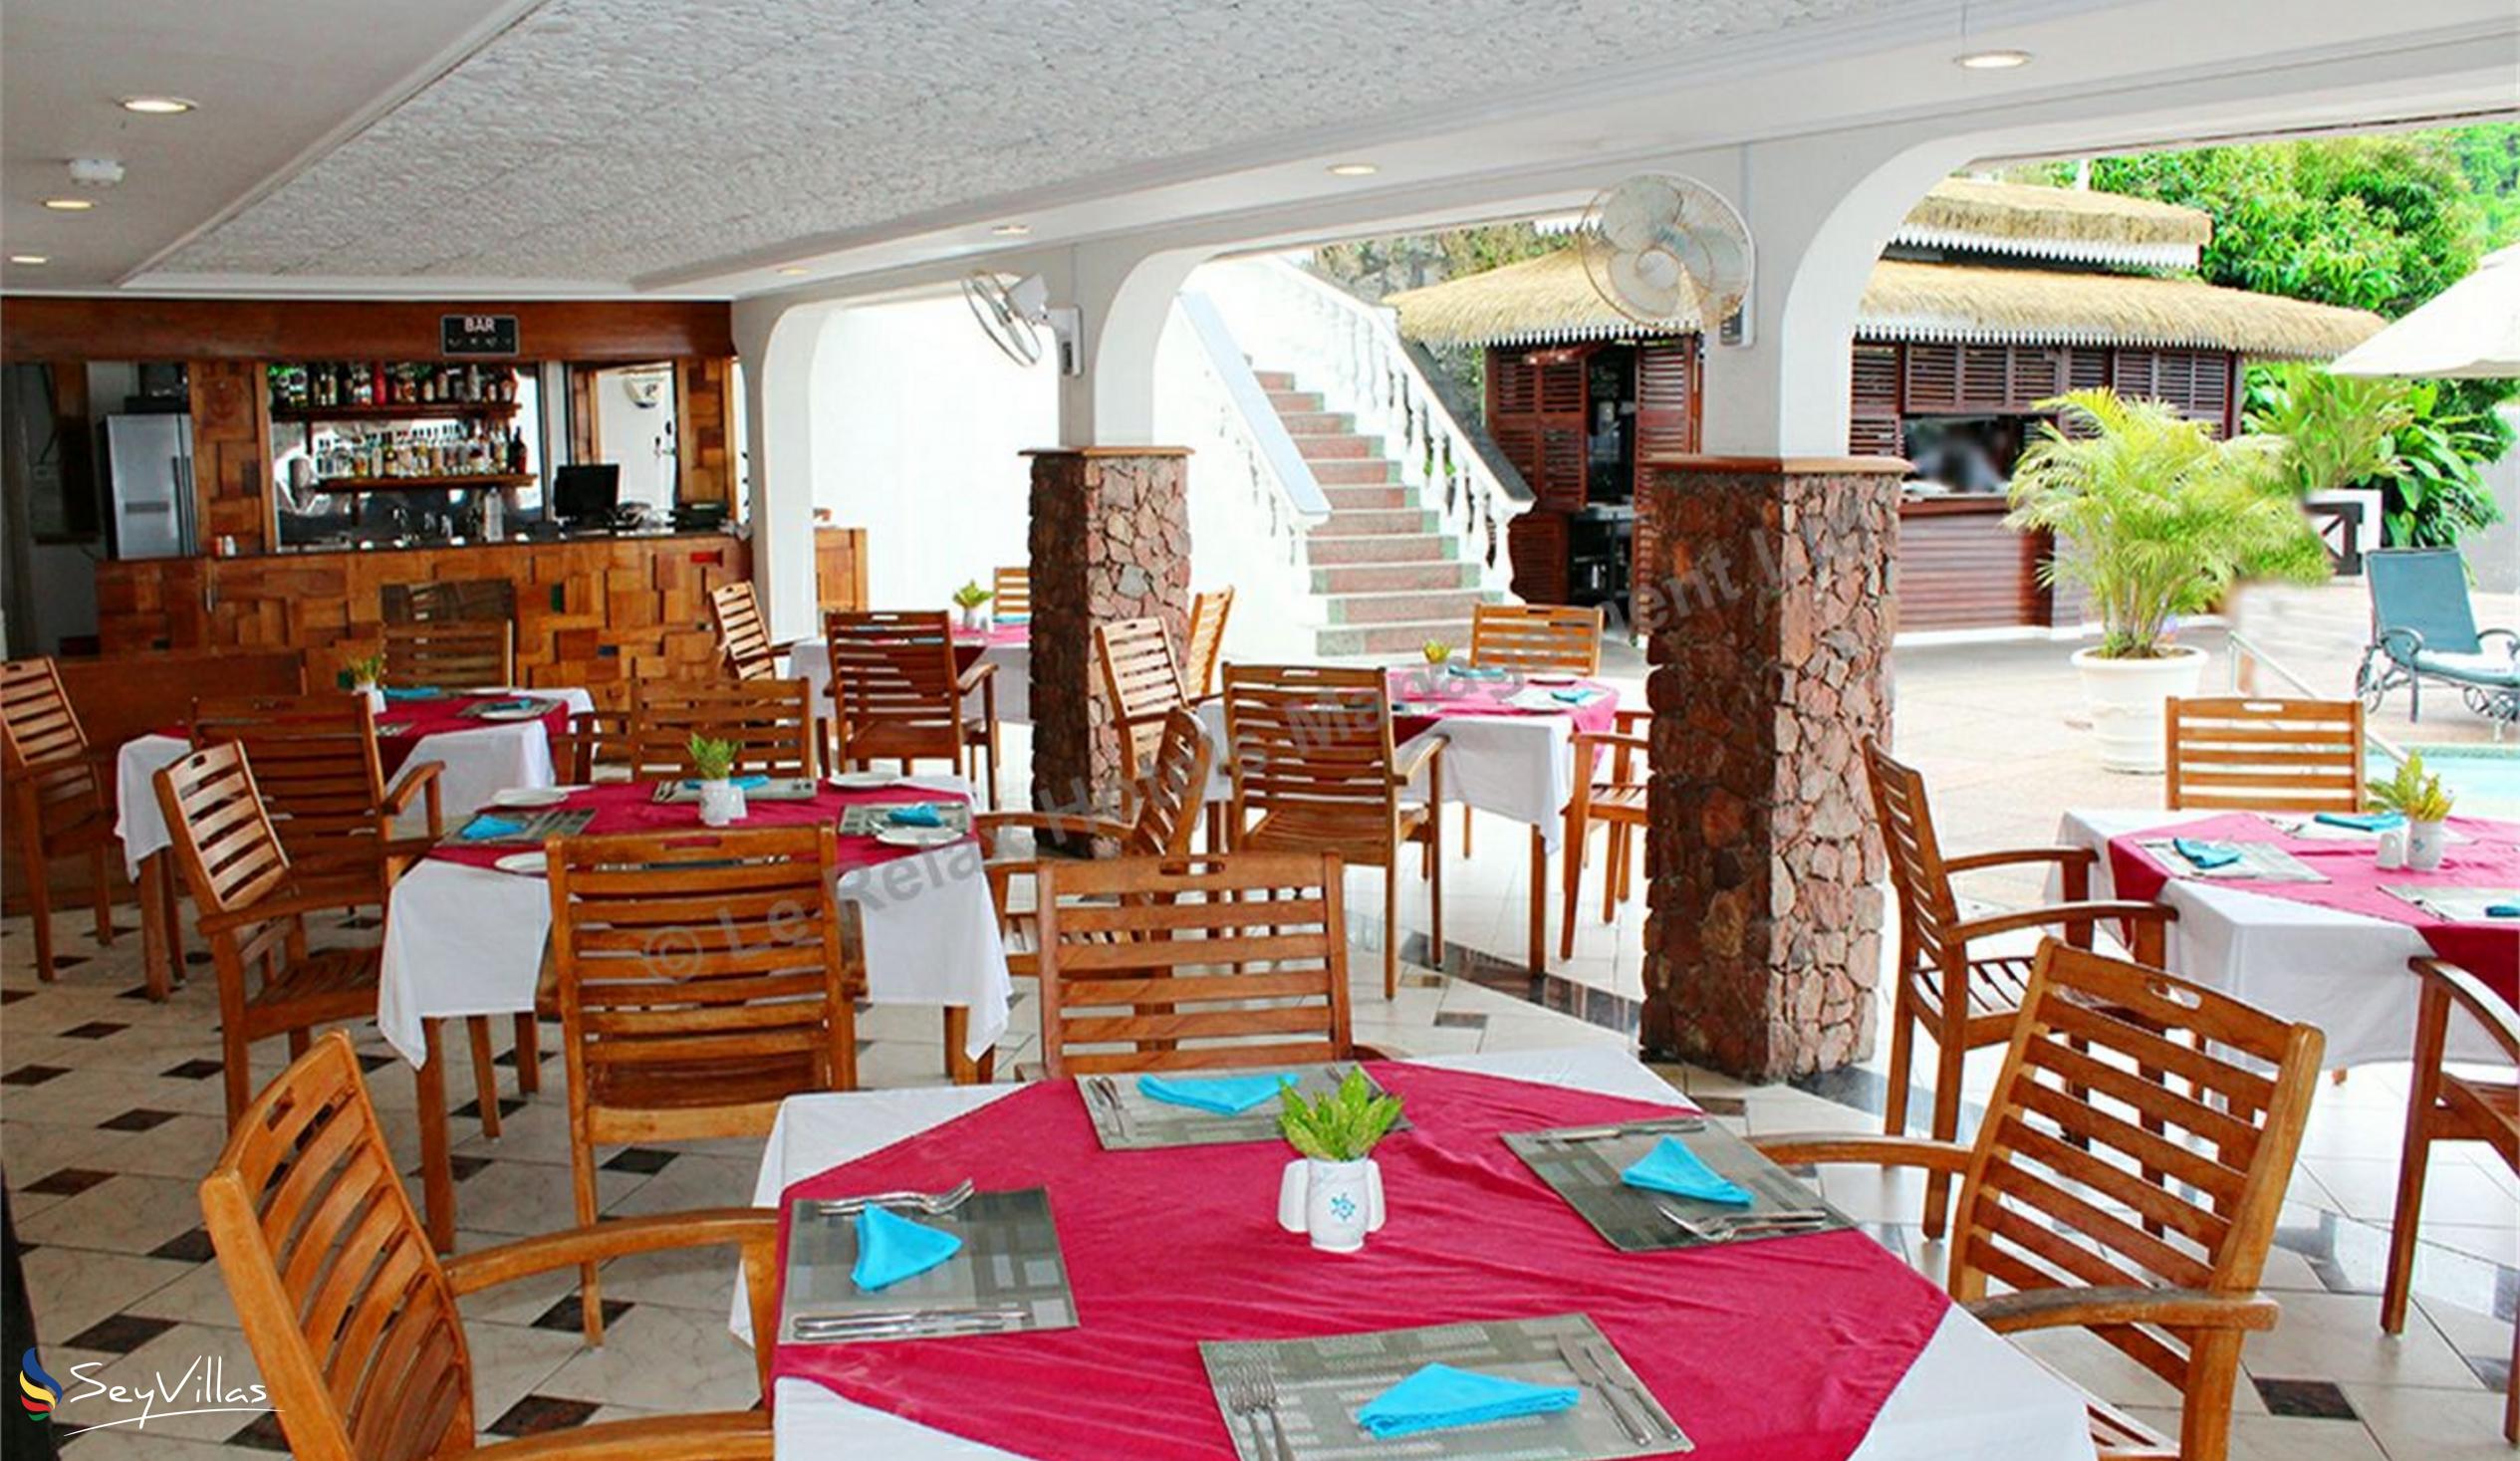 Photo 32: Le Relax Hotel & Restaurant - Indoor area - Mahé (Seychelles)